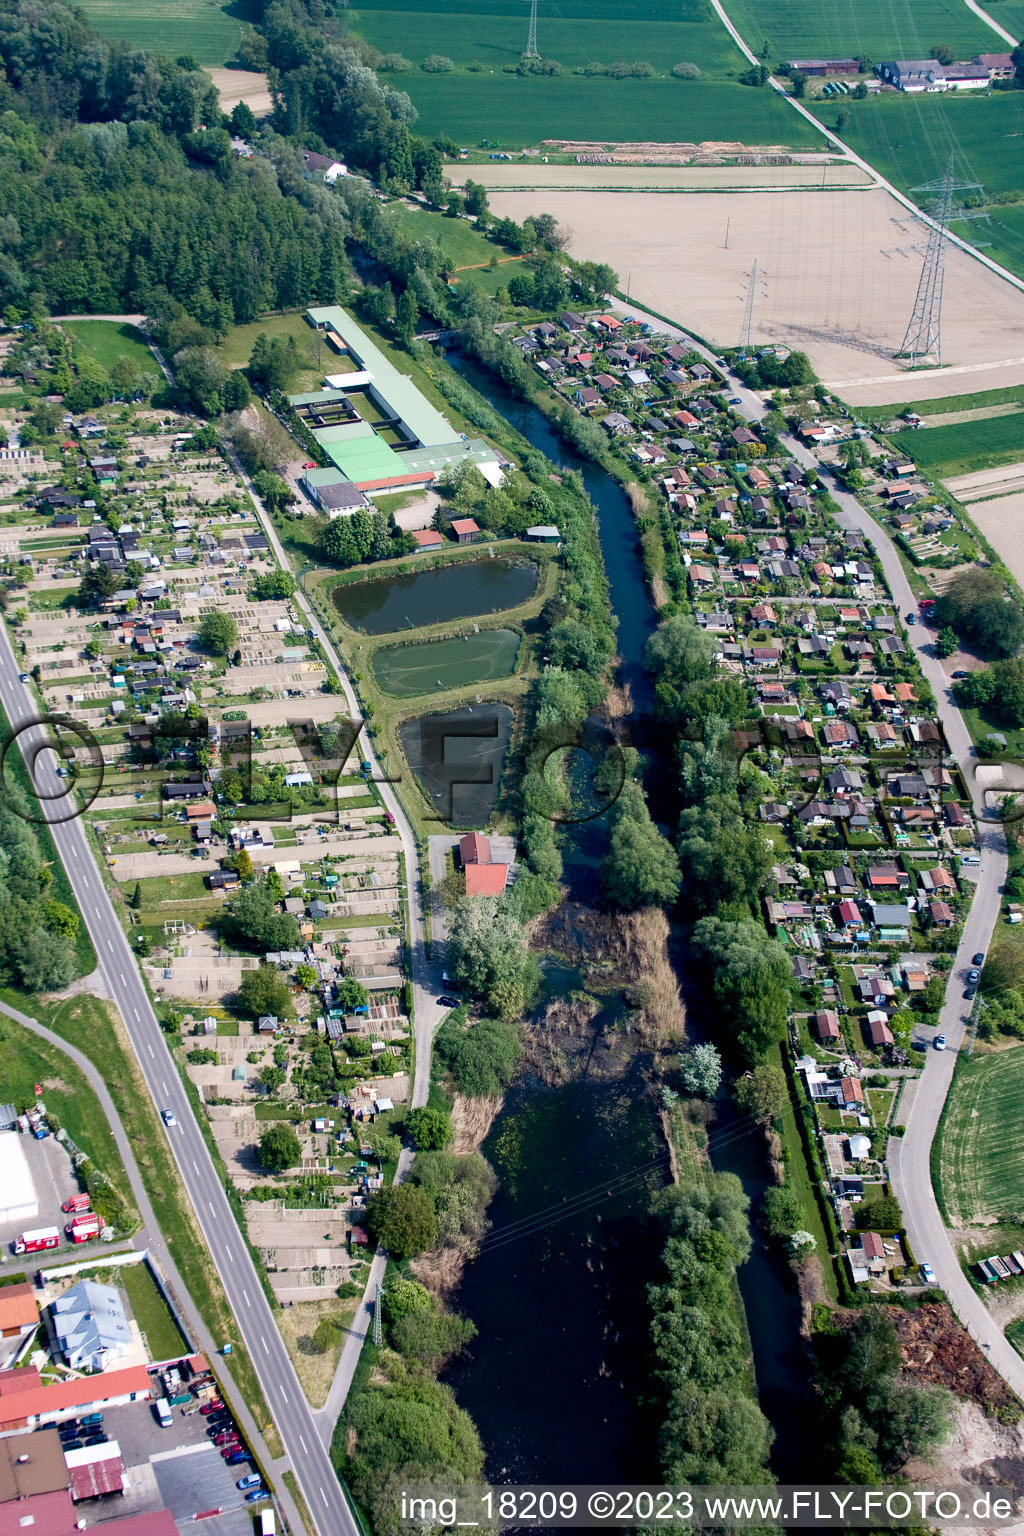 Allotment garden area in Wörth am Rhein in the state Rhineland-Palatinate, Germany